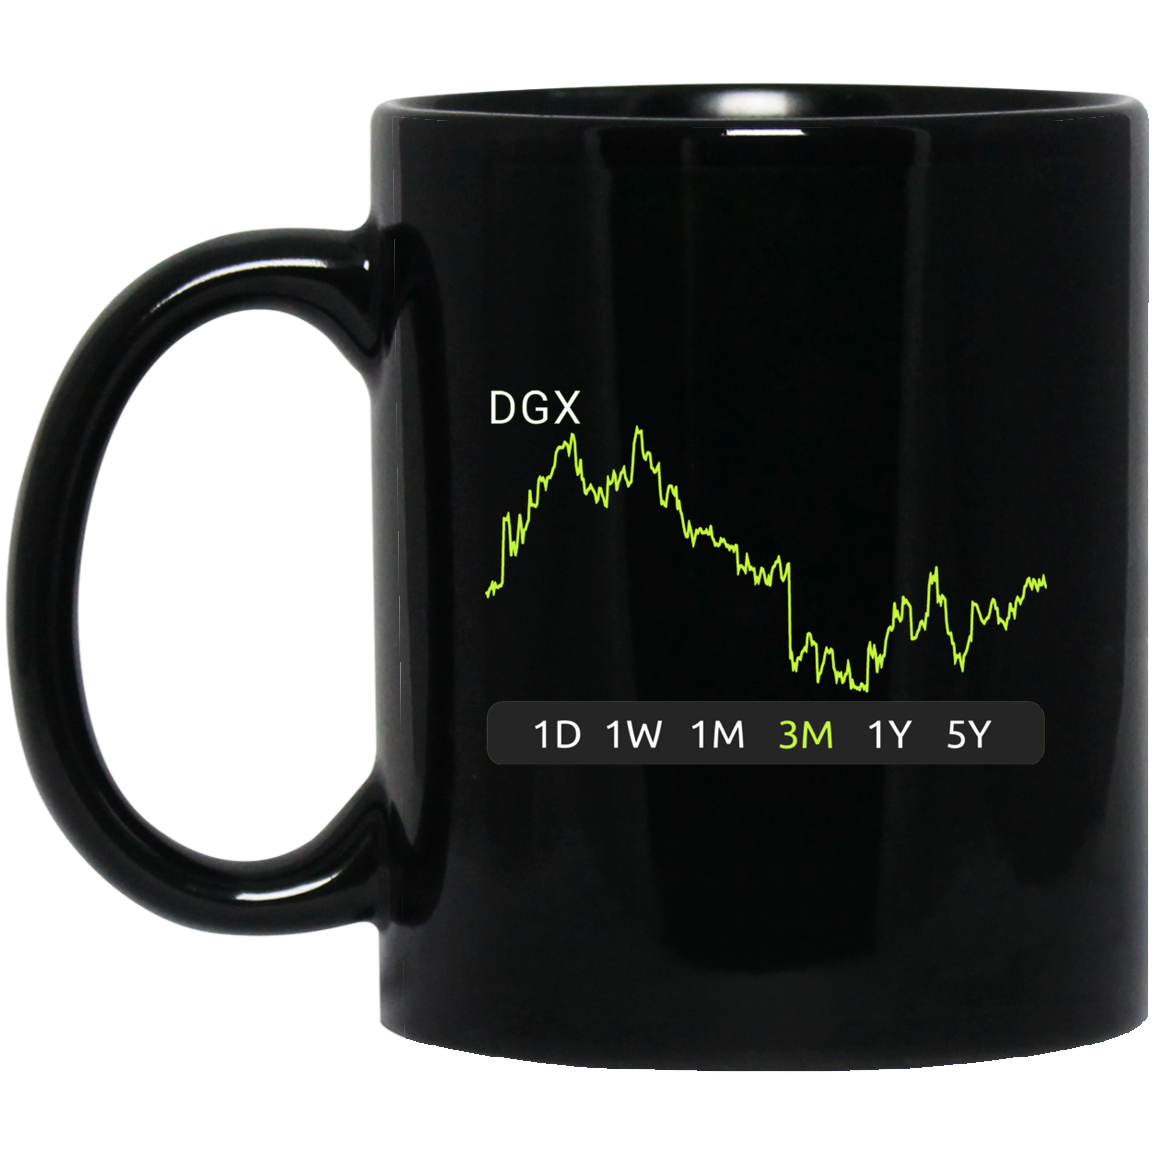 DGX Stock 3m Mug